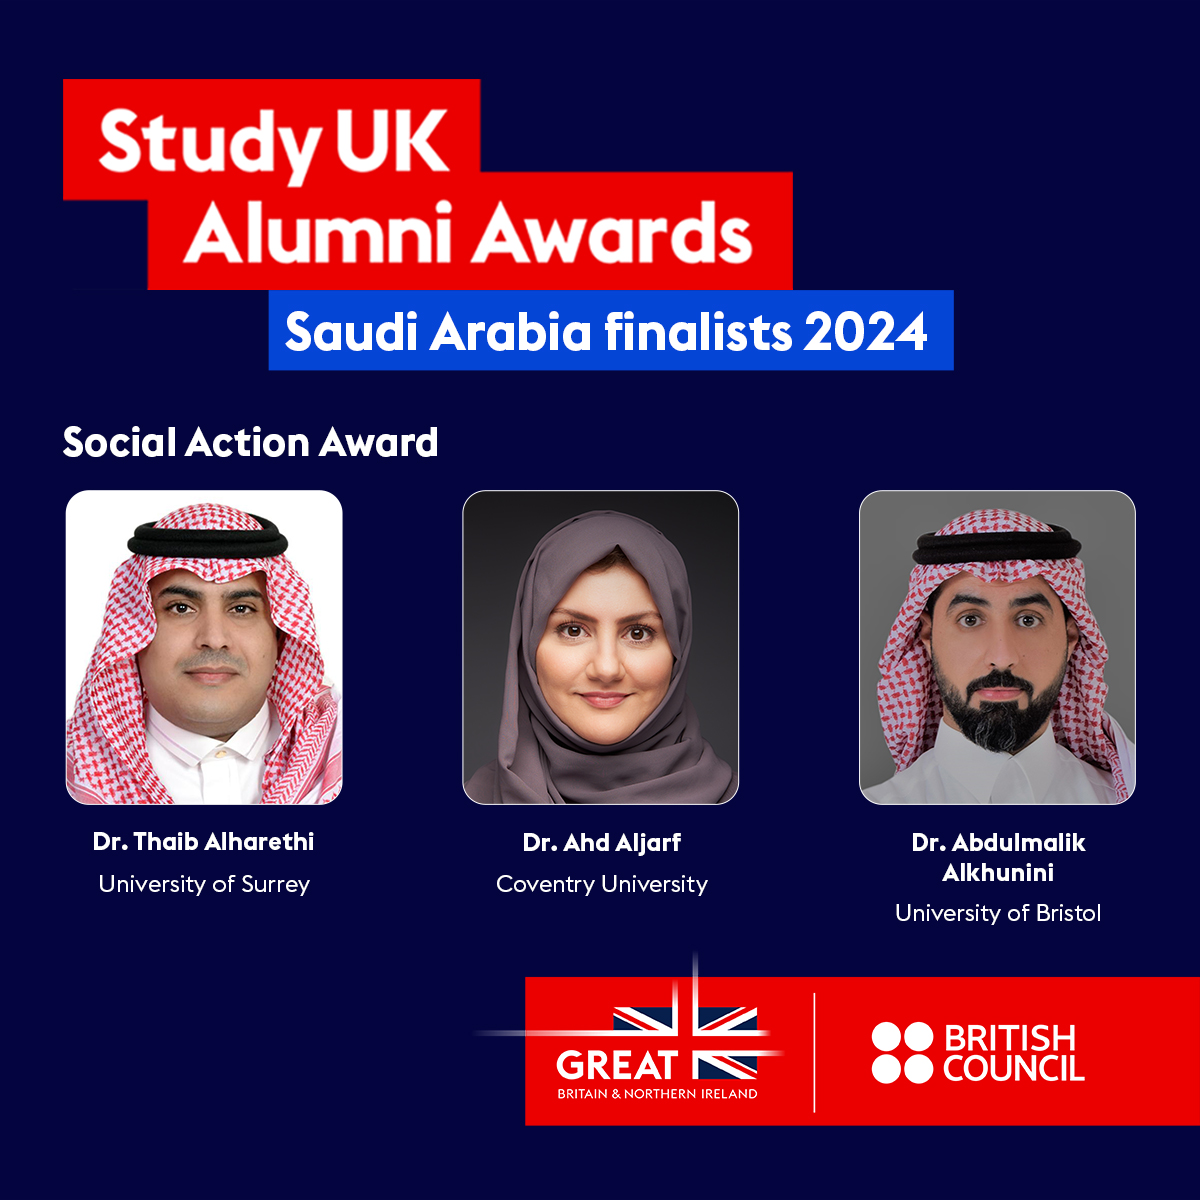 Meet our Social Action award finalists for the UK Alumni Awards 2023 - 2024
تعرف معنا على مرشحي جائزة العمل الاجتماعي لعام 2023- 2024
#StudyUK #UKAlumniAwards